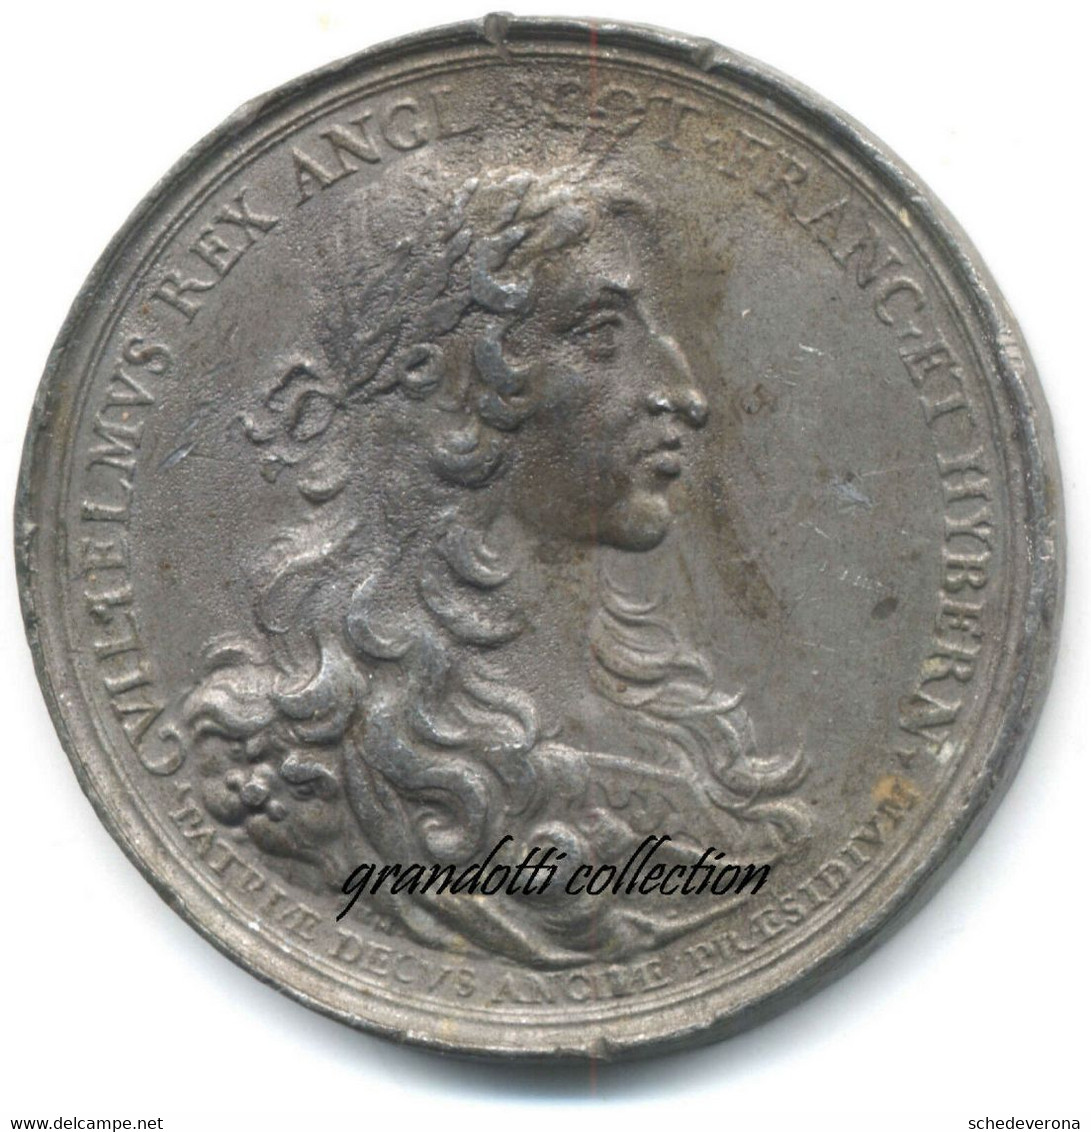 GUGLIEMO III INGHILTERRA 1689 BRITANNIA RESTITUITA MEDAGLIA MÜLLER - Adel